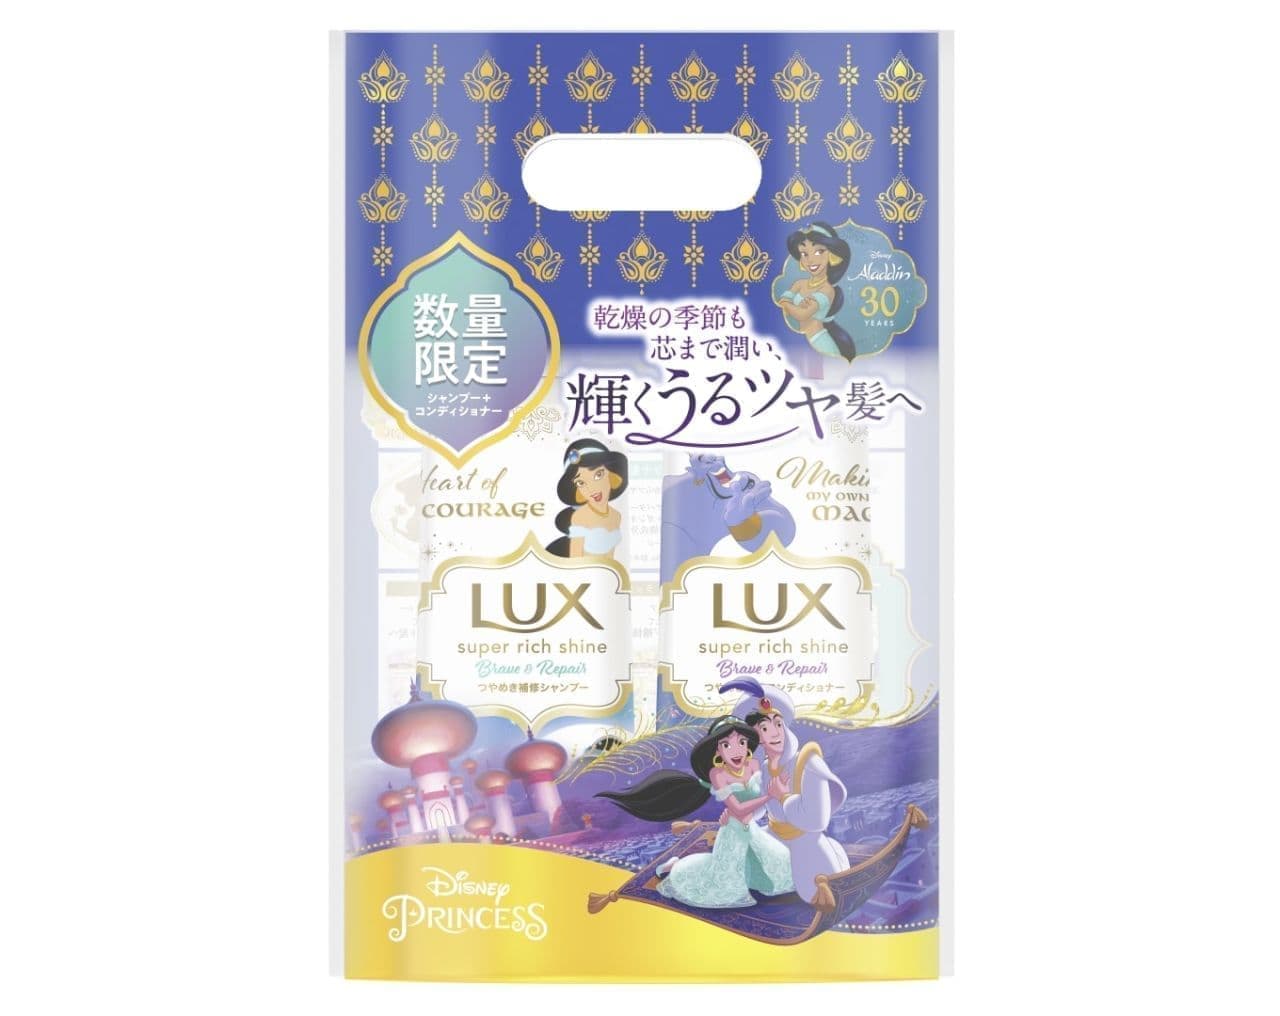 Lux Super Rich Shine Brave & Repair Aladdin Design Pump Pair